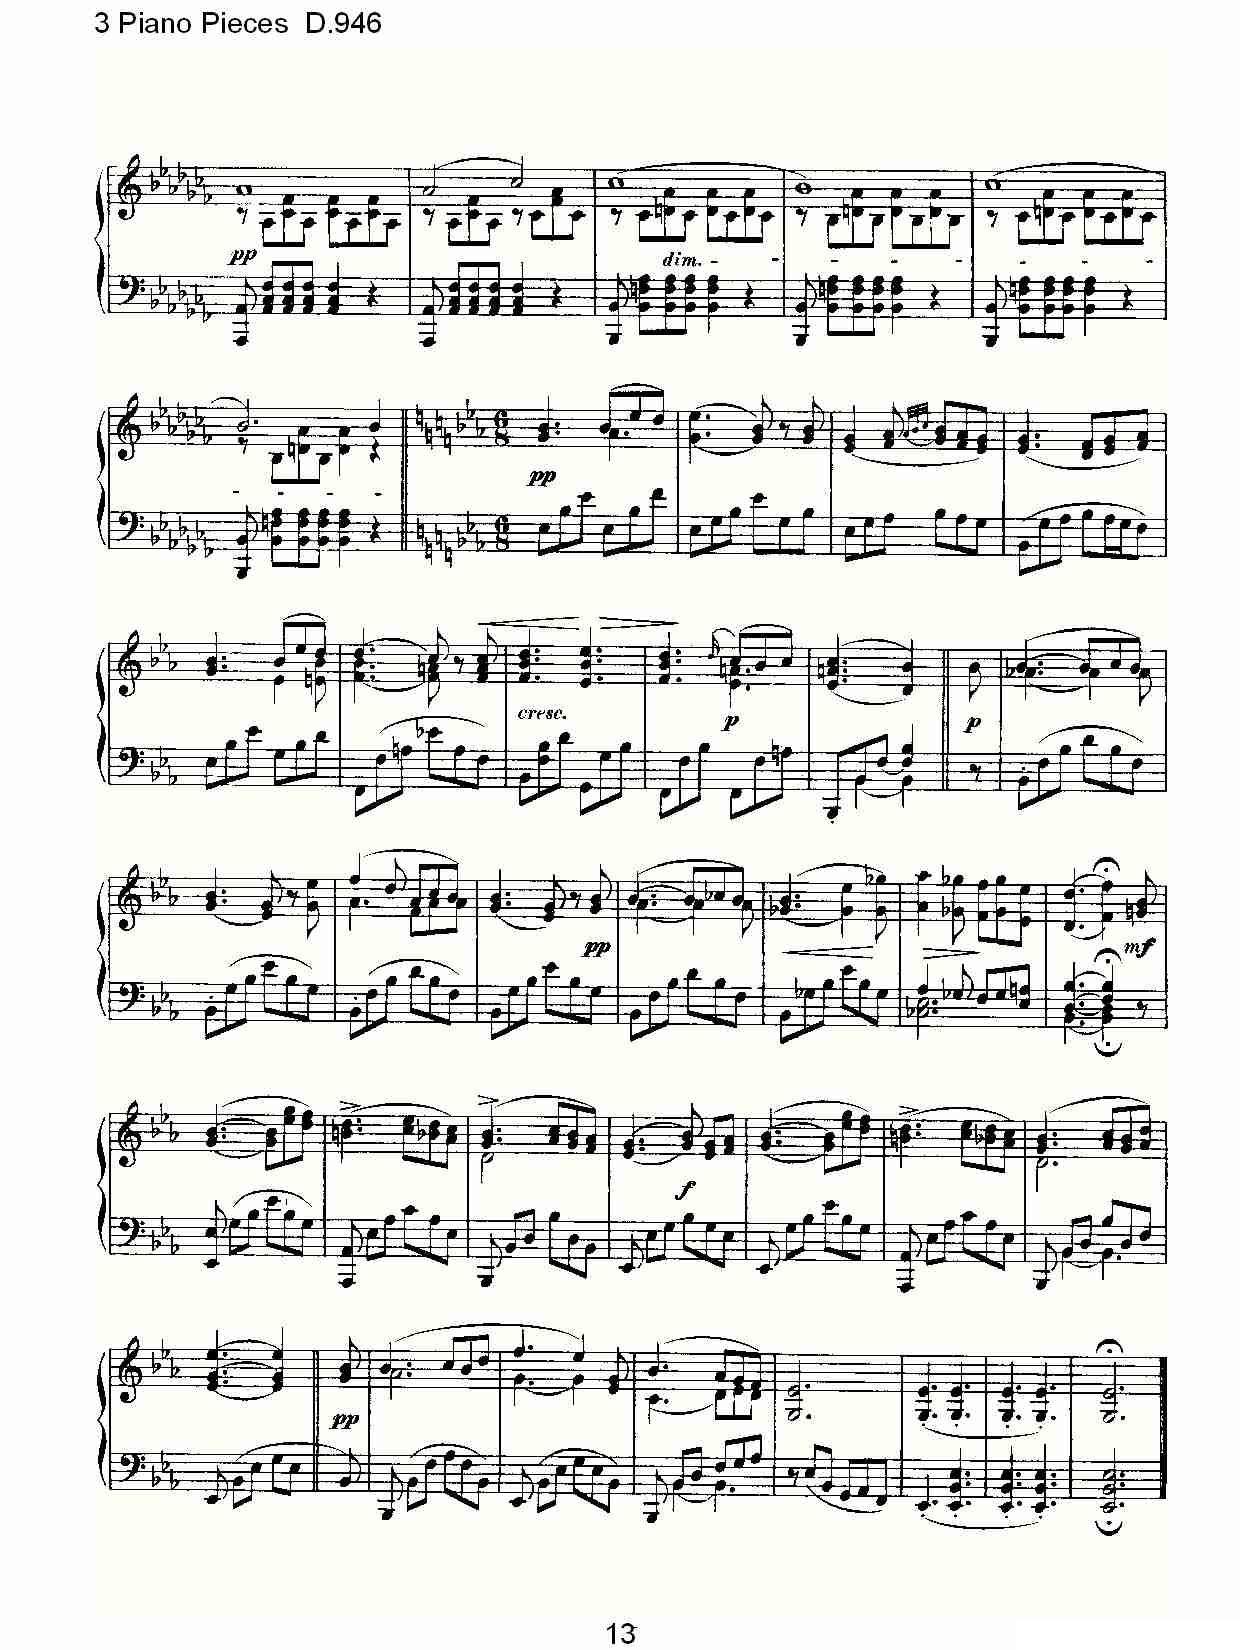 3 Piano Pieces D.946（钢琴三联奏D.946）钢琴曲谱（图13）